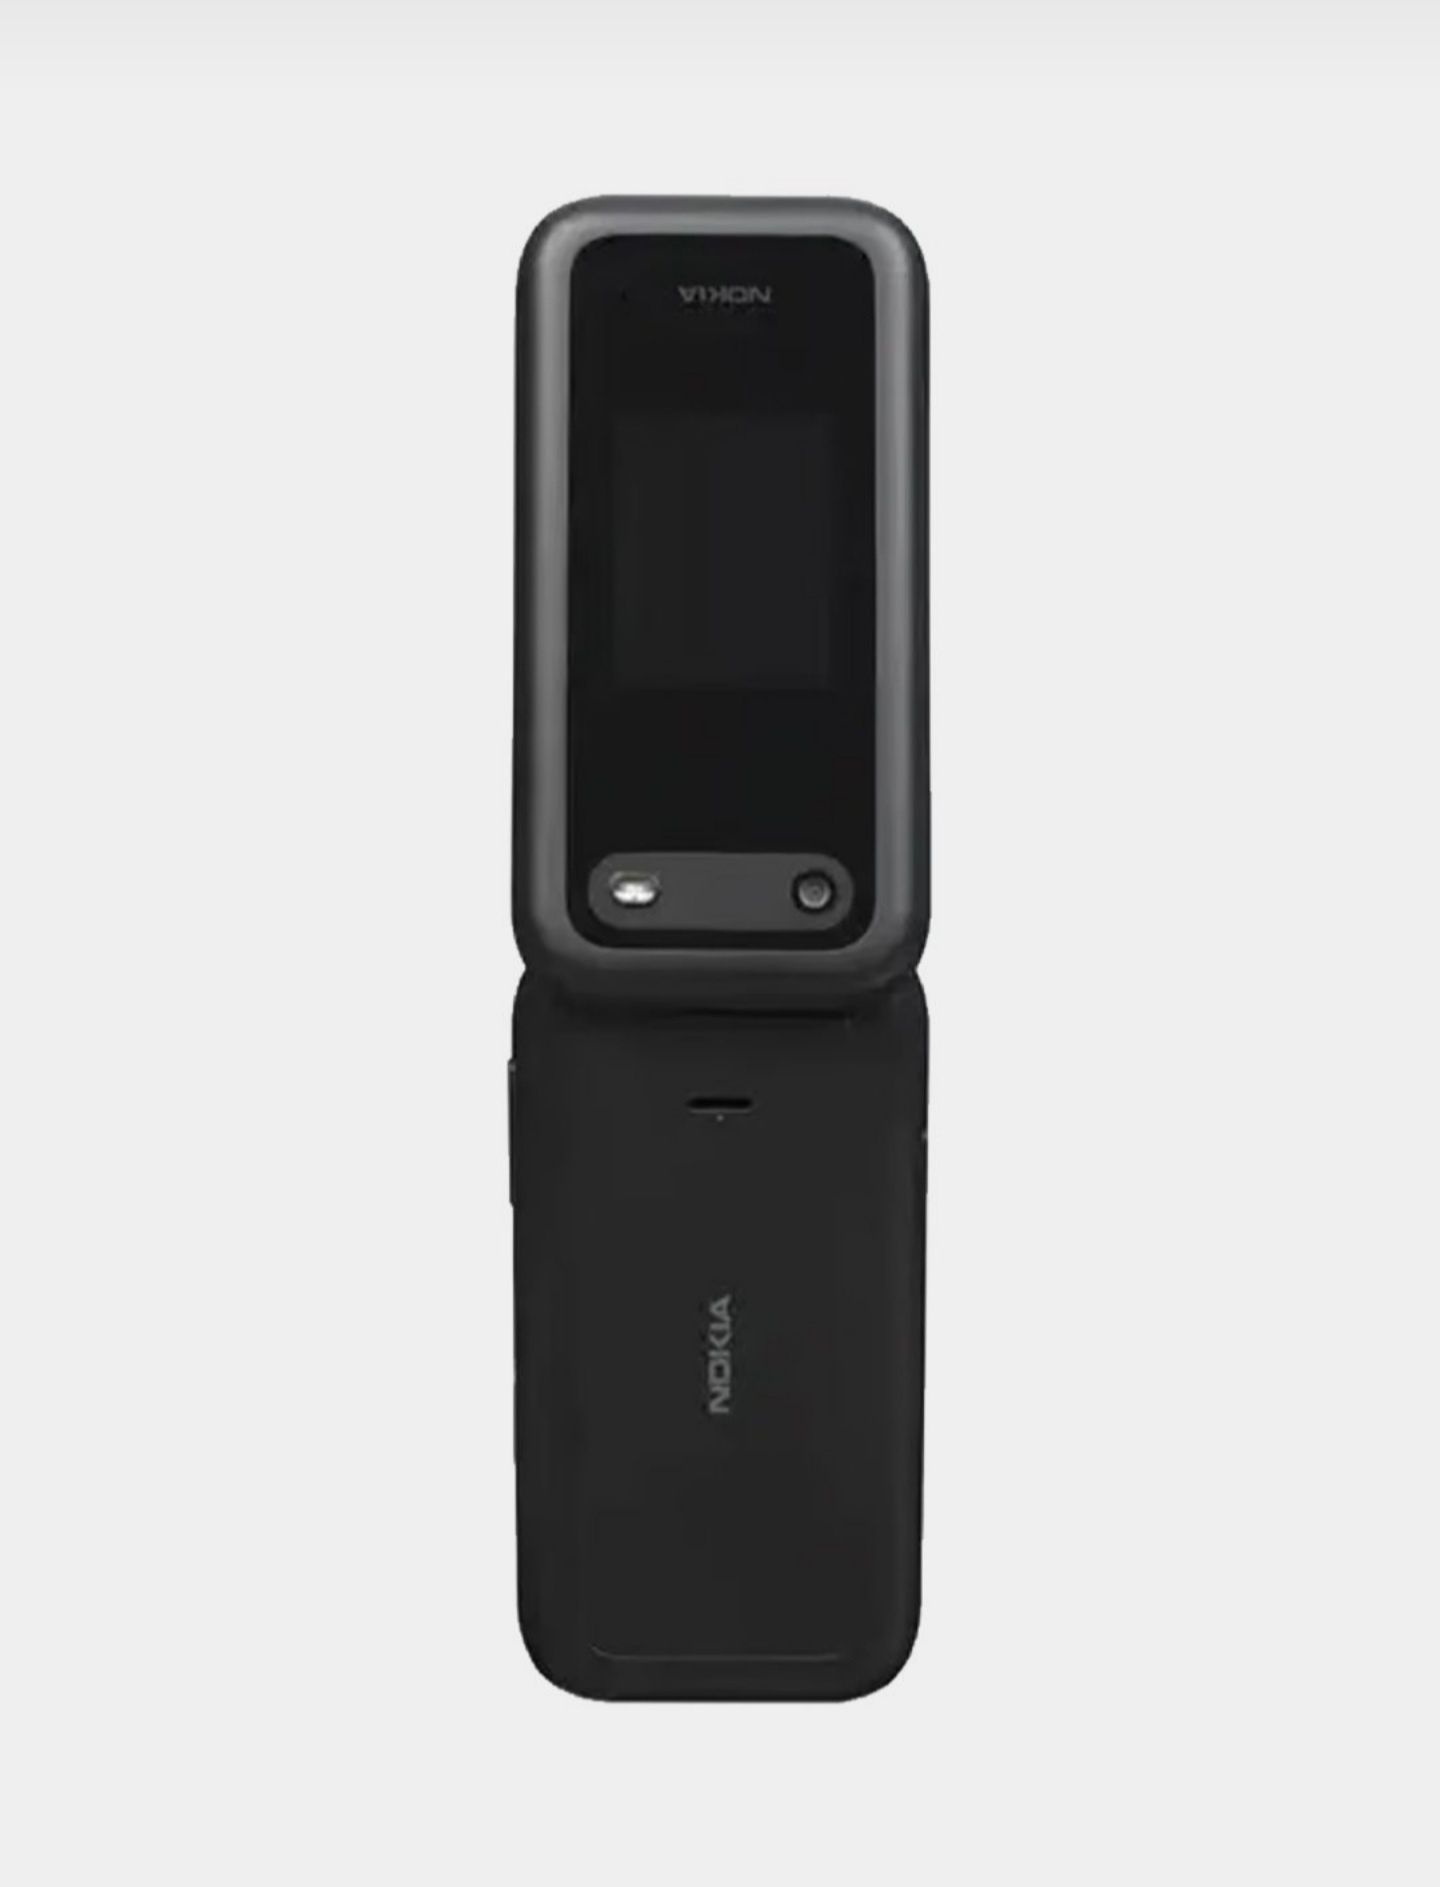 Nokia 2660 ideal